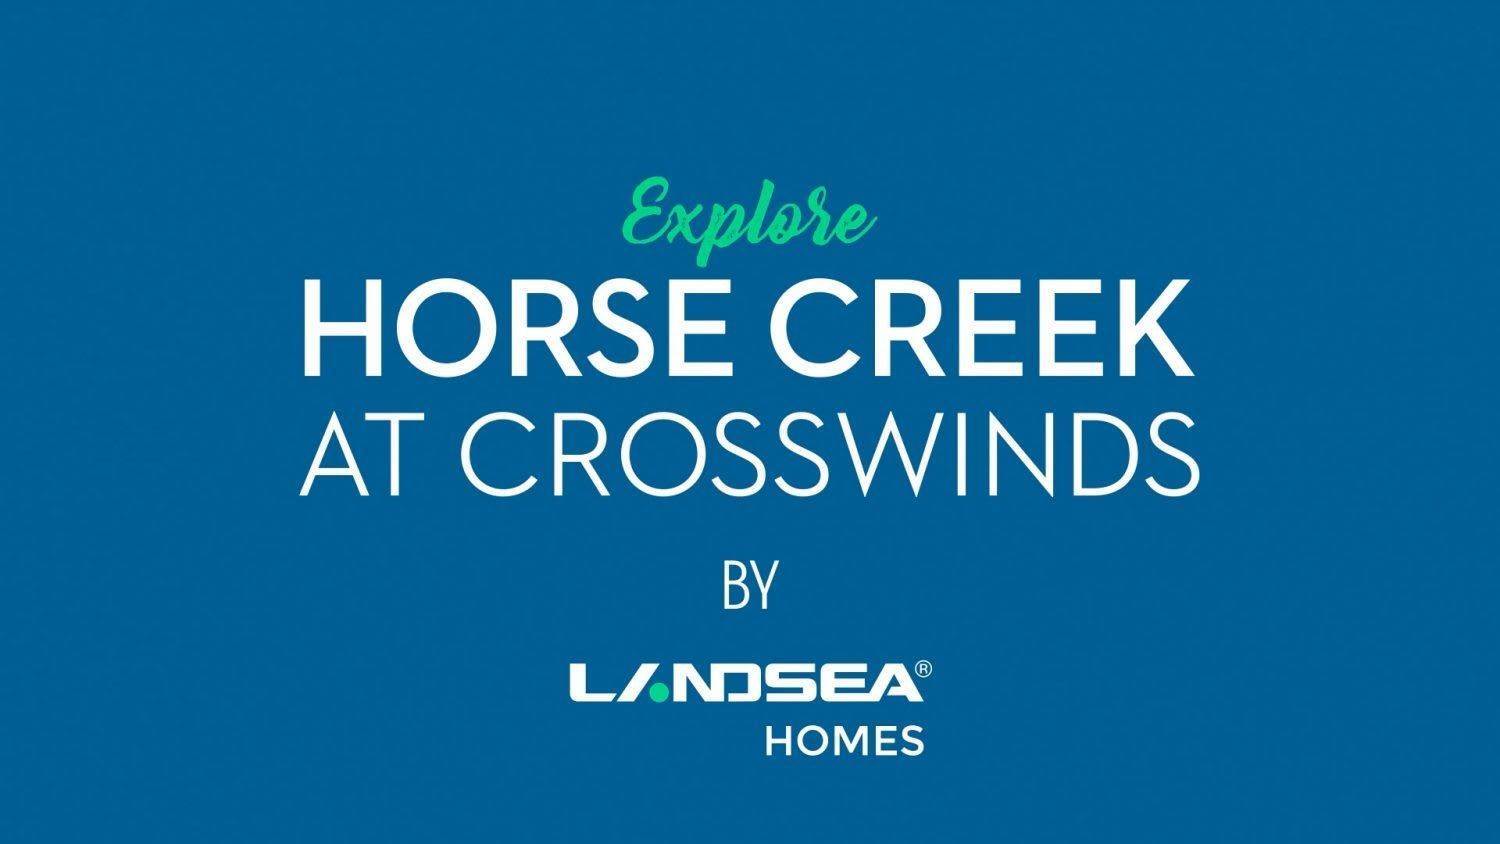 4. Horse Creek at Crosswinds building at 402 Cool Summer Lane, Davenport, FL 33837